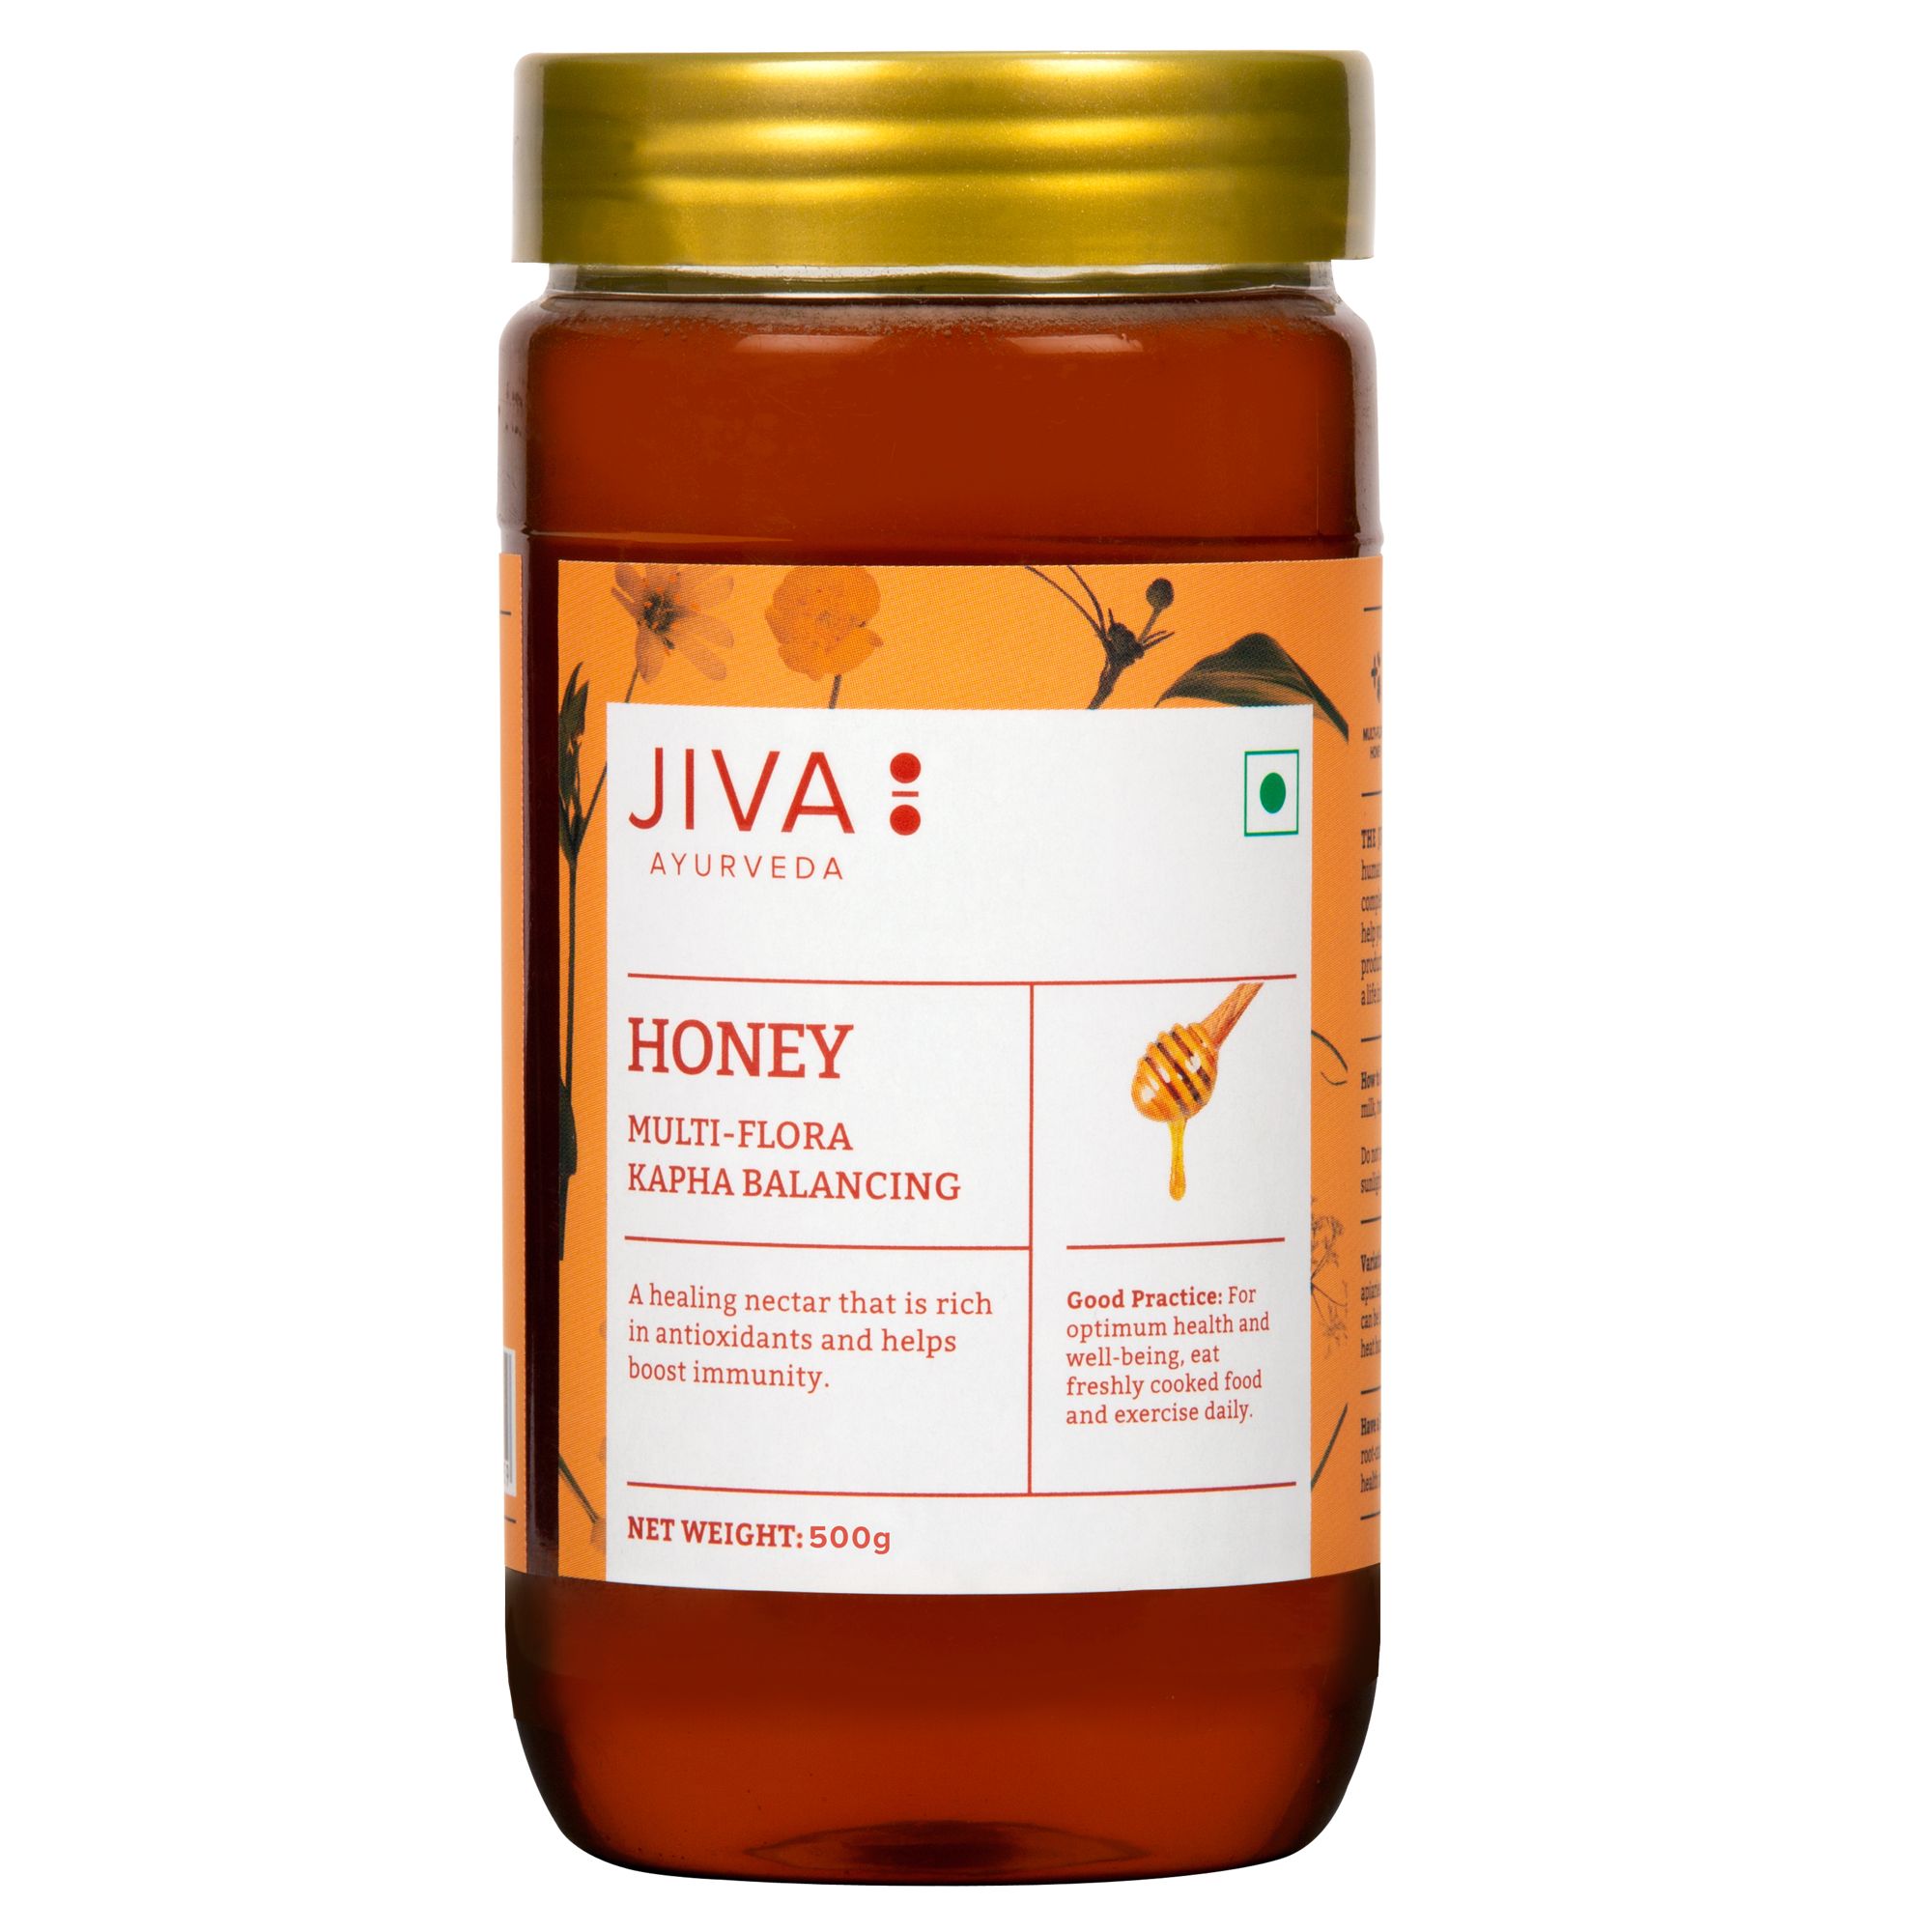 Buy Jiva Ayurveda Honey at Best Price Online